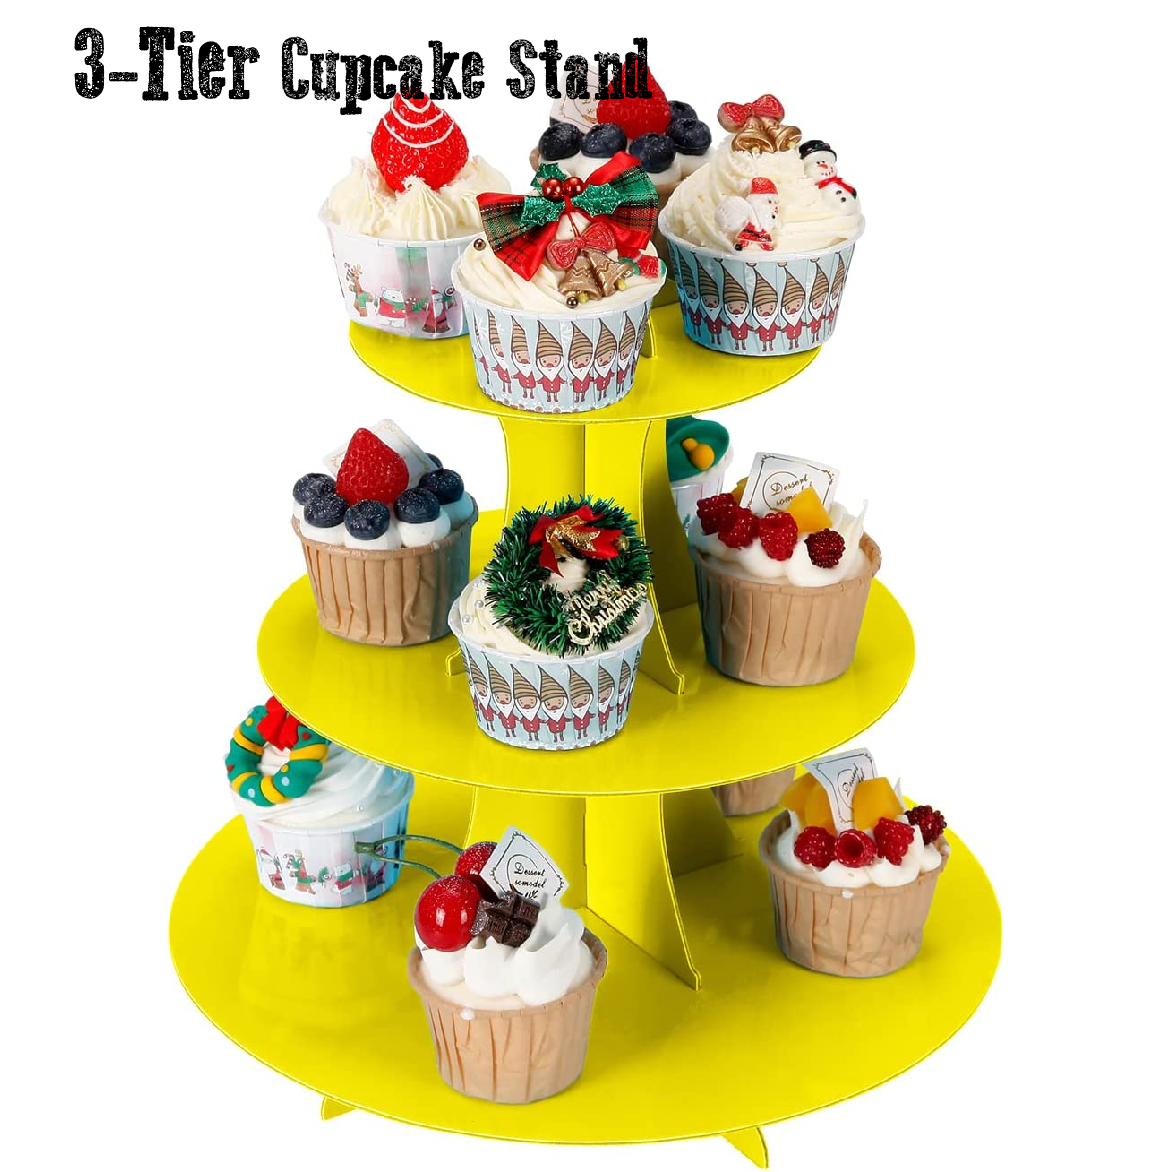 Cupcake Stand/Tower - 3 Tier Cupcake Display - Cardboard - Yellow